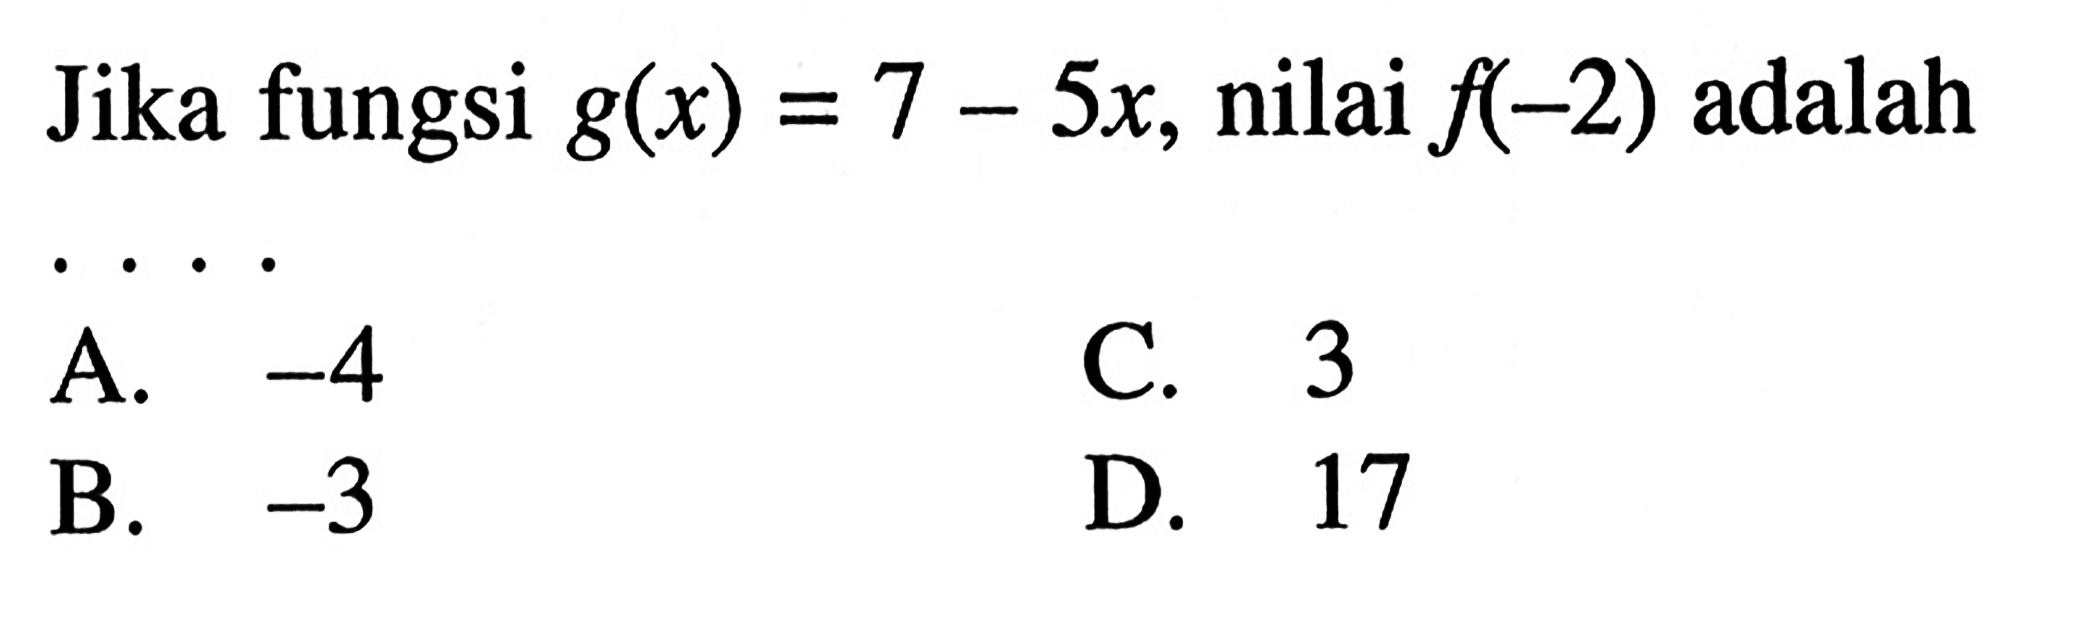 Jika fungsi g(x) = 7 - 5x, nilai f(-2) adalah...